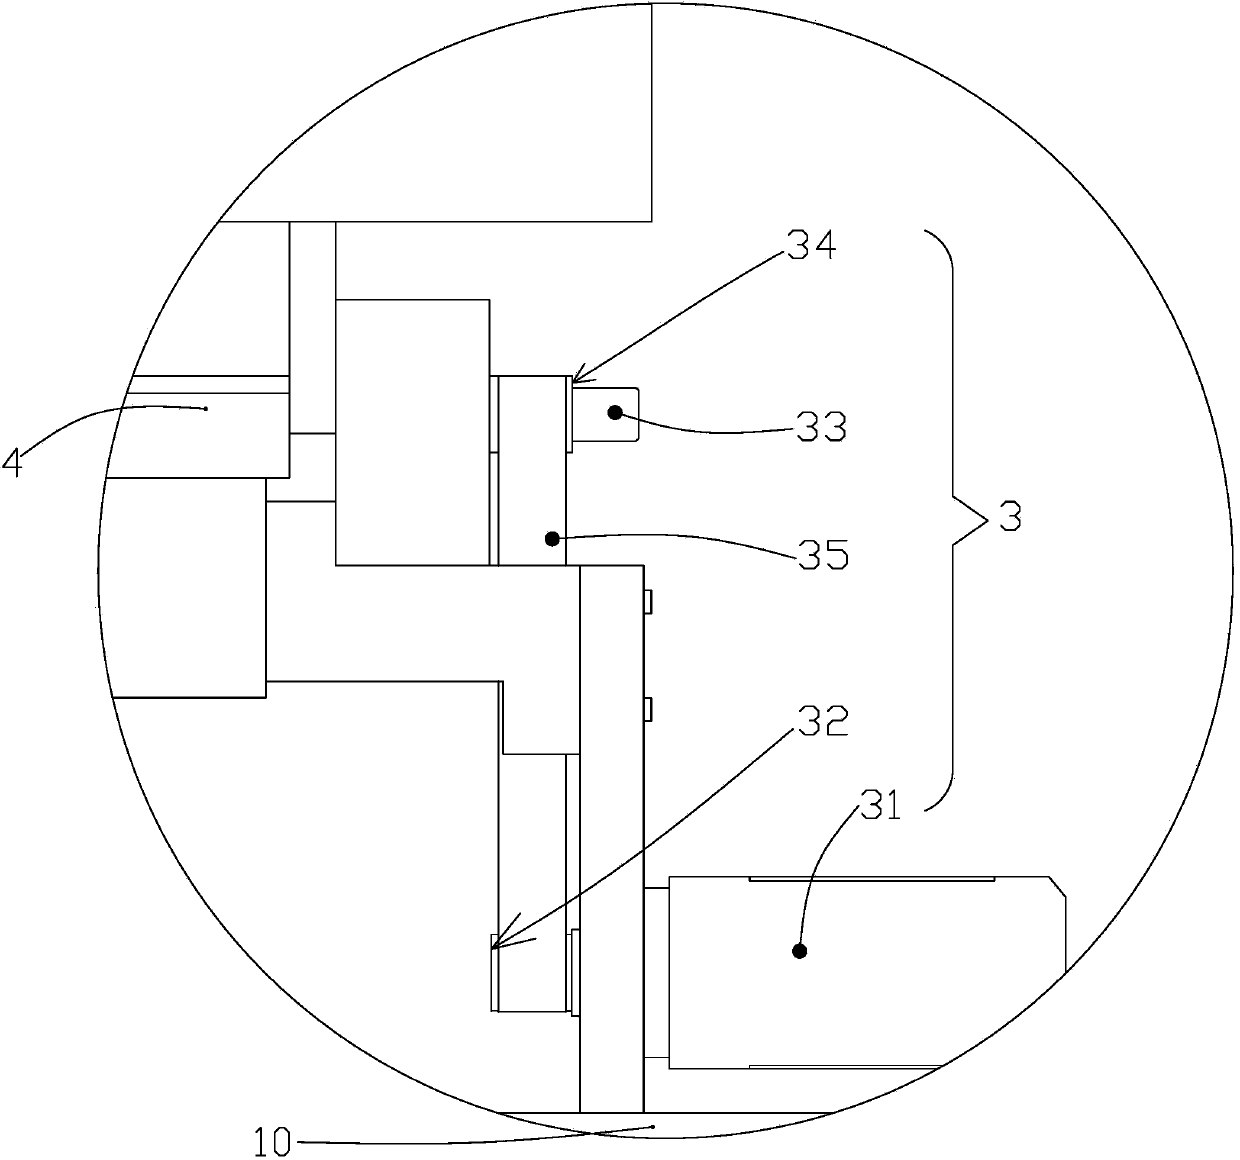 Novel numerical control flat grinder